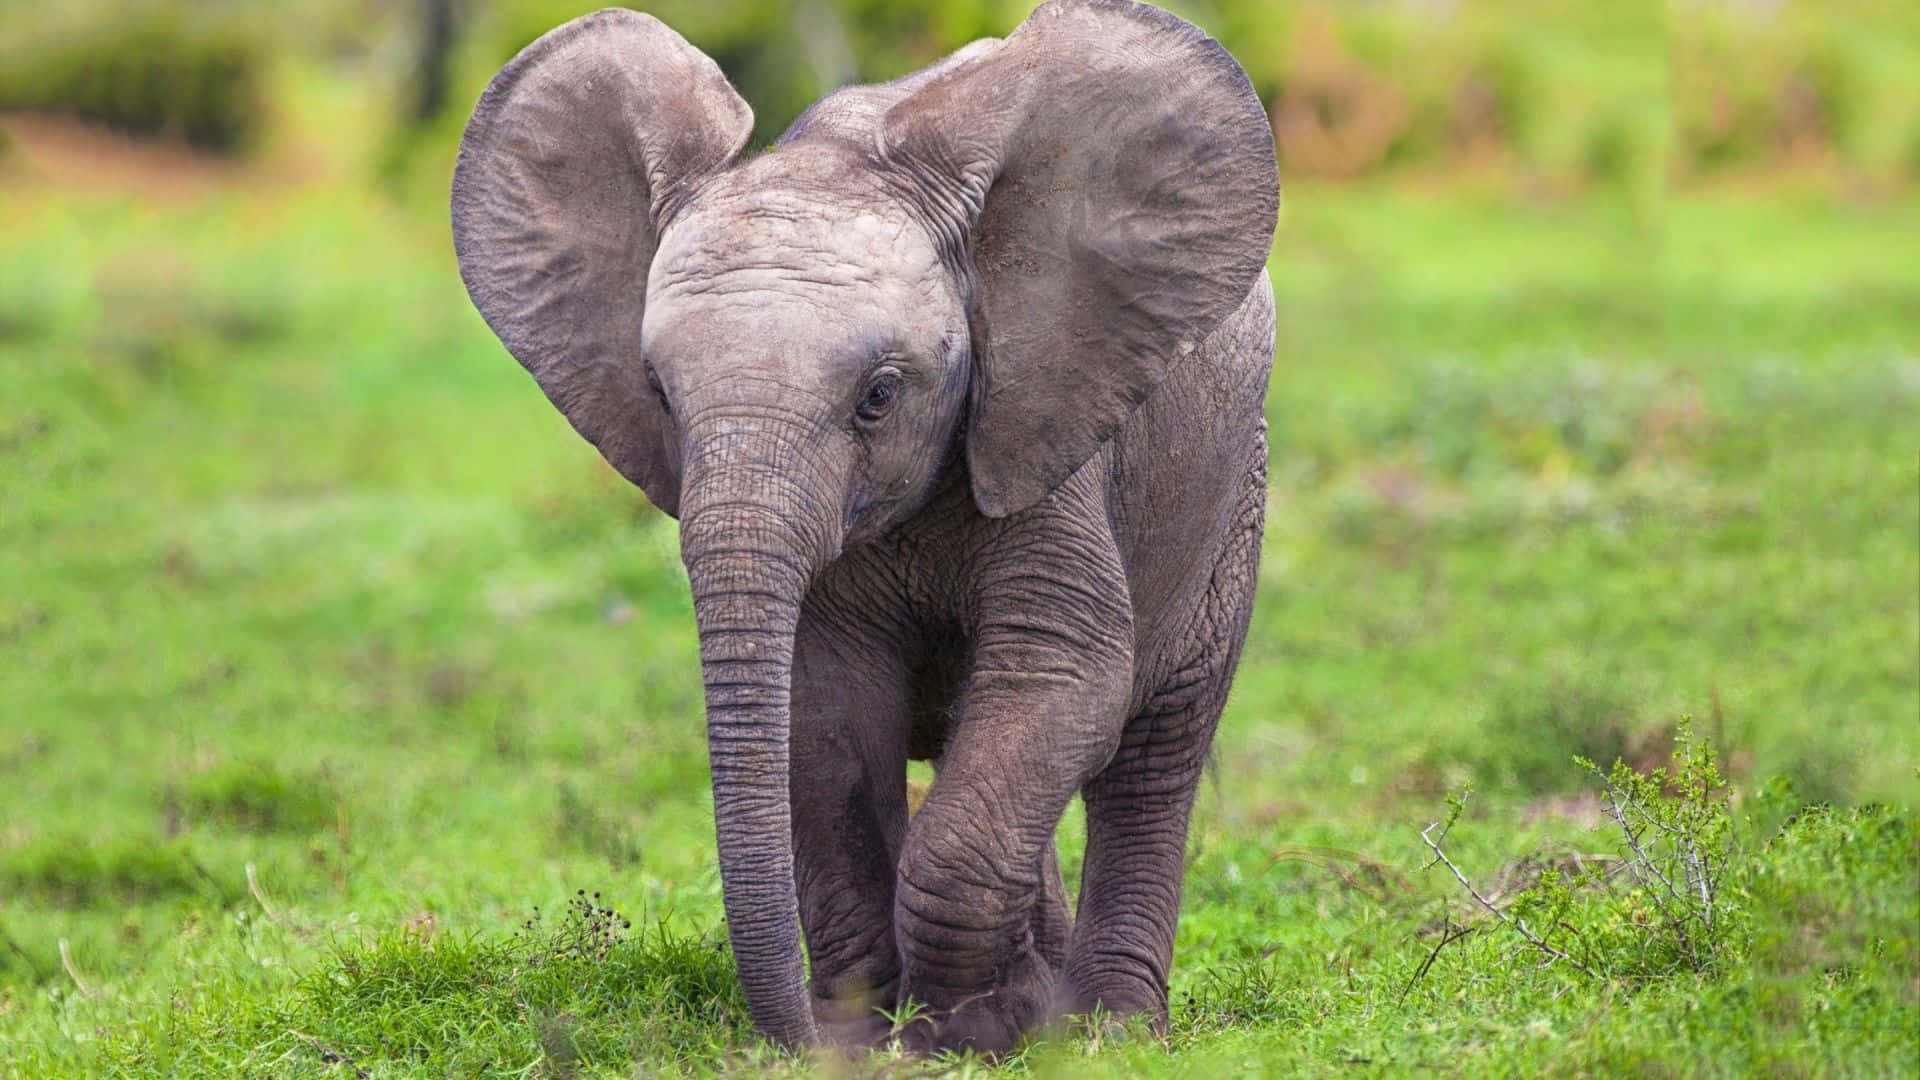 A Baby Elephant Walking Through A Field Of Grass